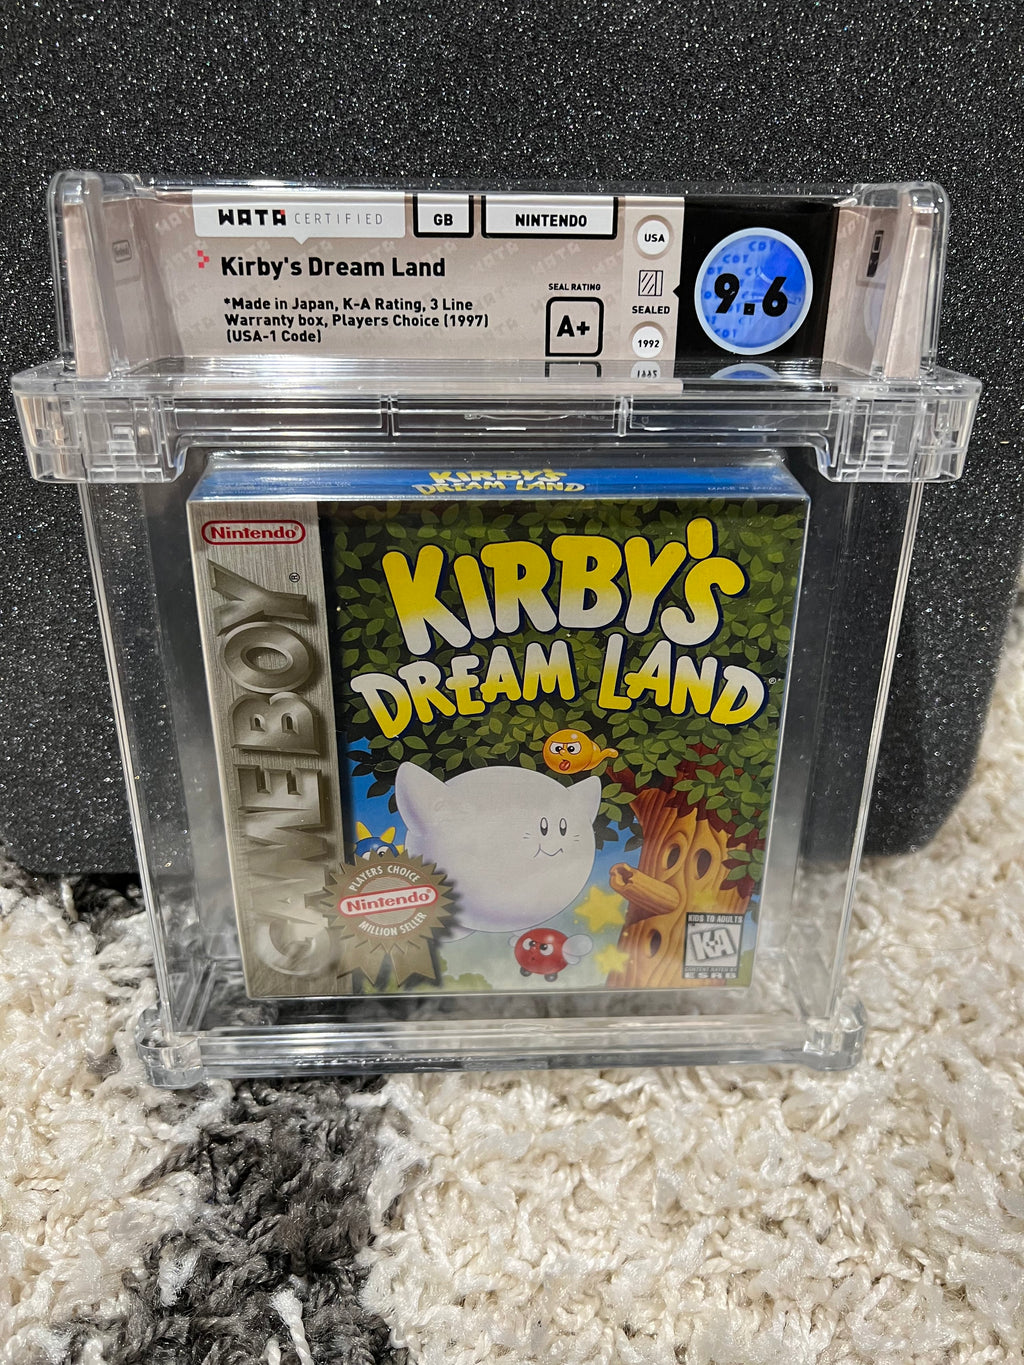 Kirby's Dream Land - WATA 9.6 A+ Sealed, GB Nintendo 1992